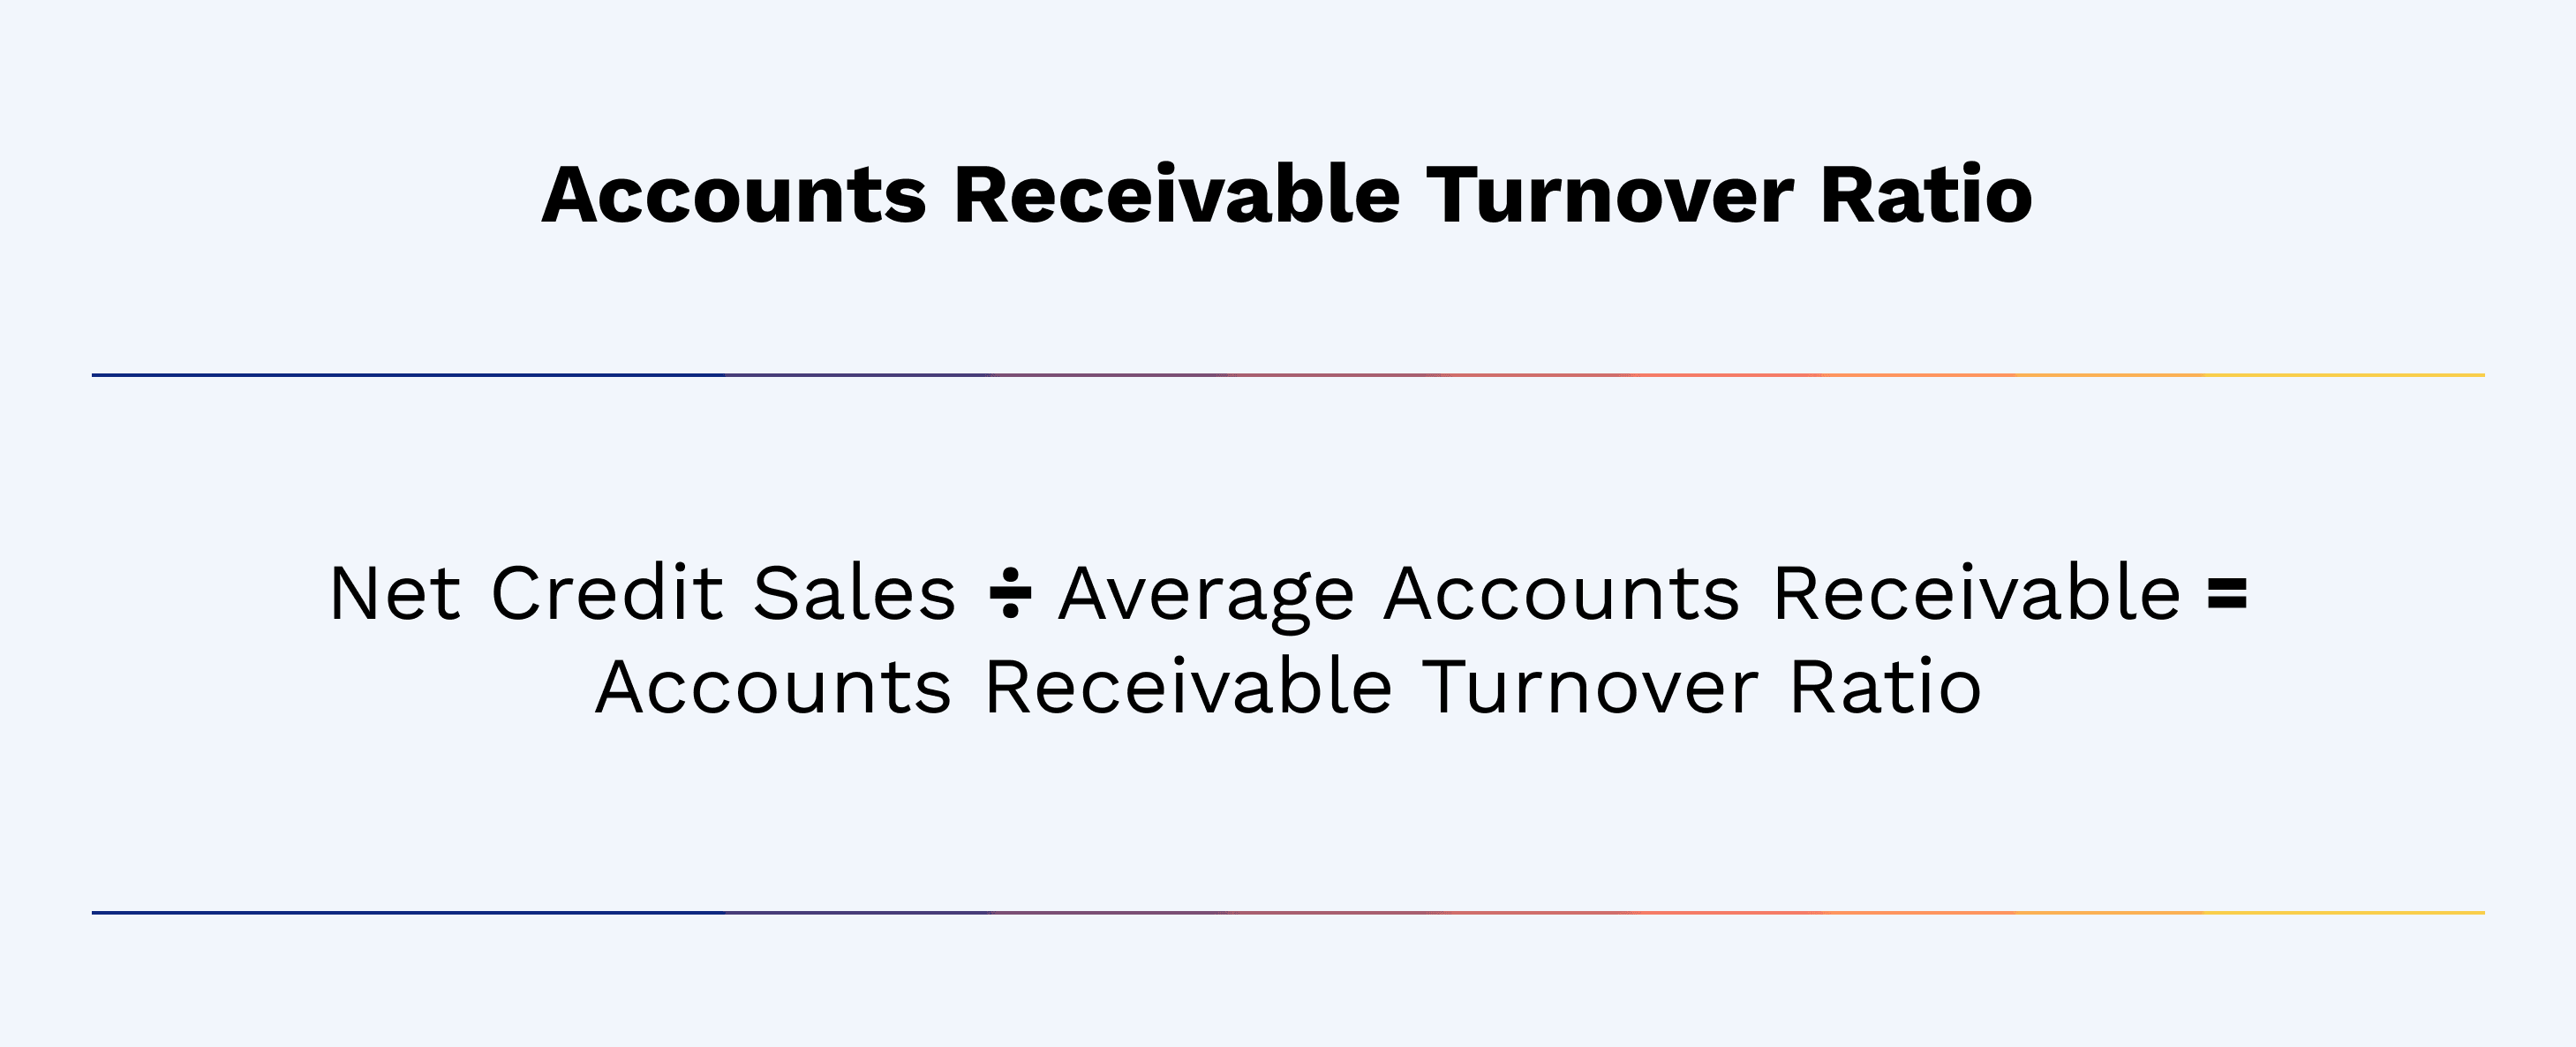 Net Credit Sales ÷ Average Accounts Receivable = Accounts Receivable Turnover Ratio